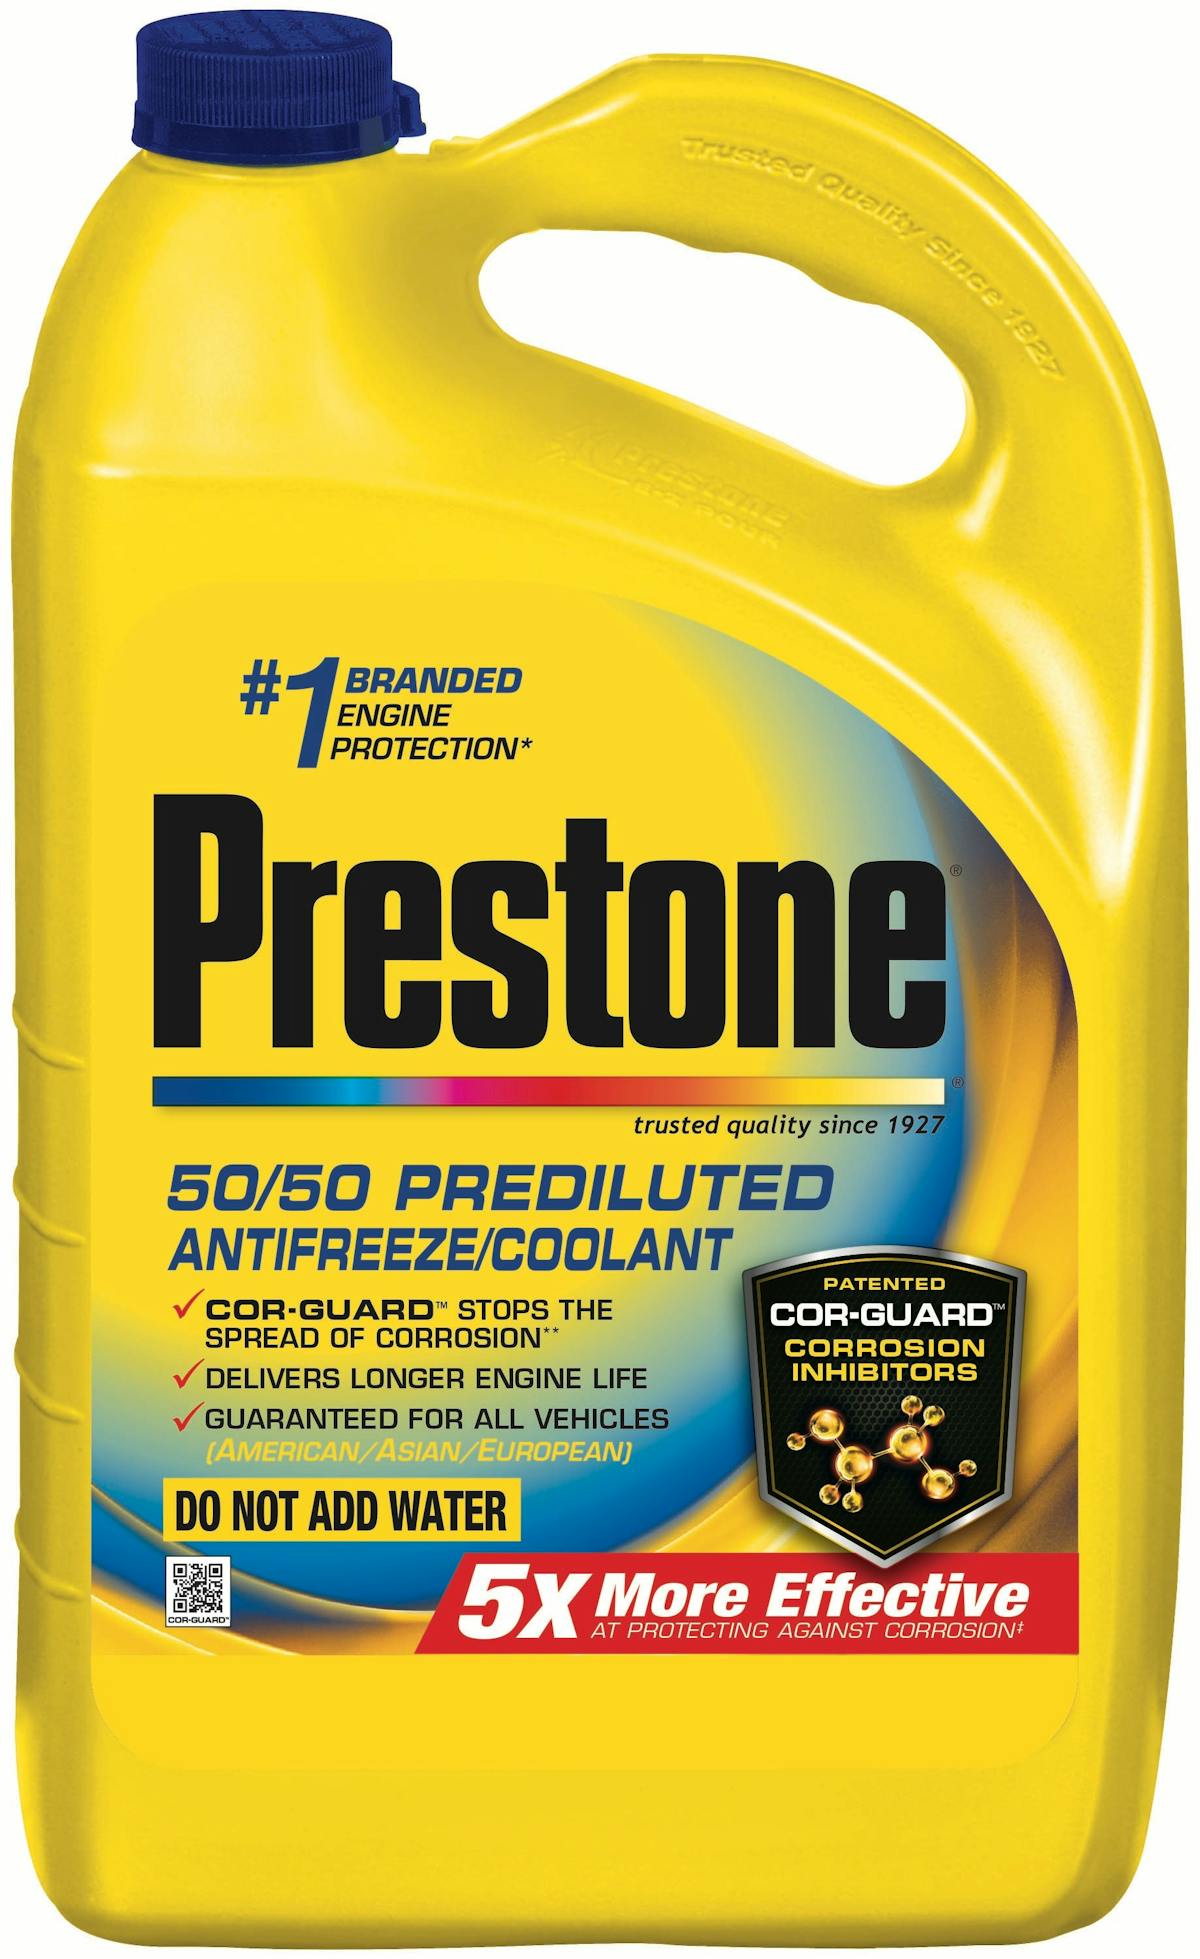 prestone-offers-new-antifreeze-coolant